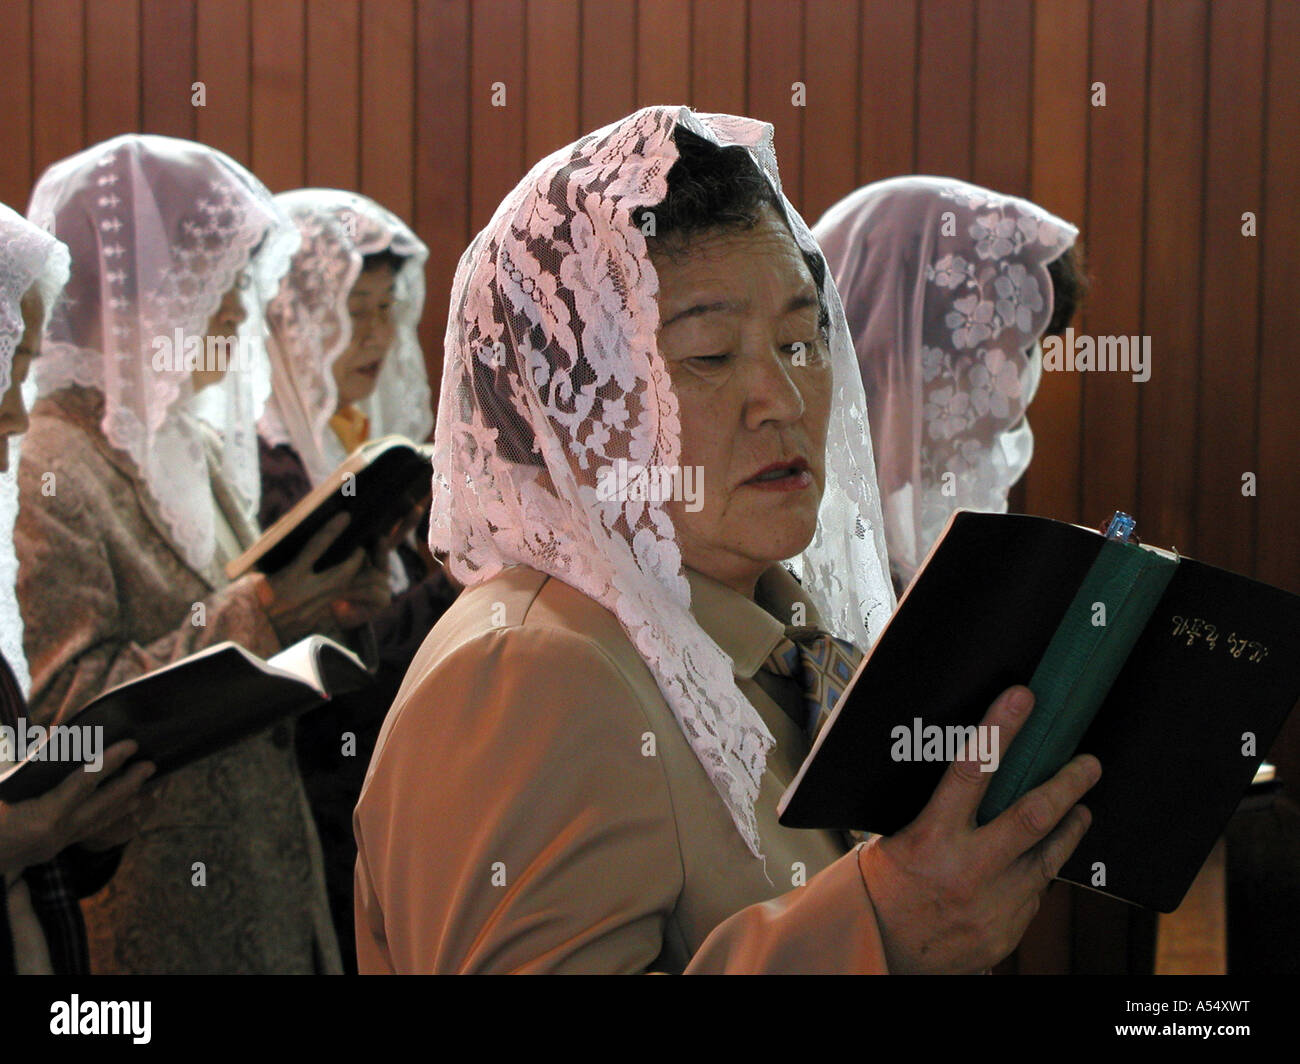 Painet ip2165 women head scarf shawl korea catholic mass seoul 2003 country  developing nation less economically developed Stock Photo - Alamy